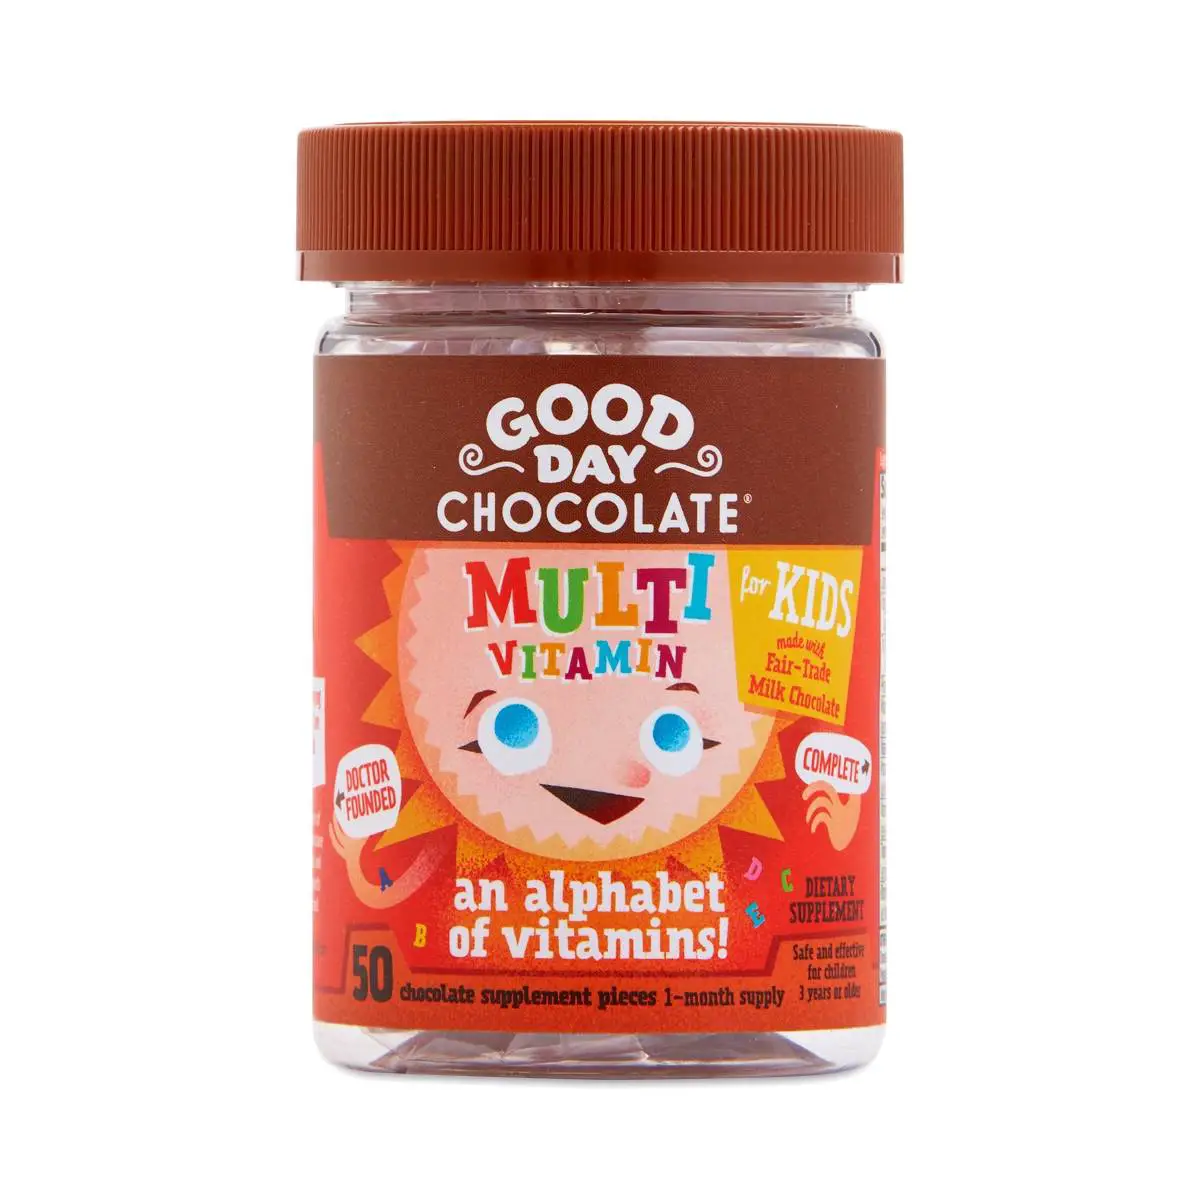 Good Day Chocolate Milk Chocolate Multivitamin Supplement for Kids ...